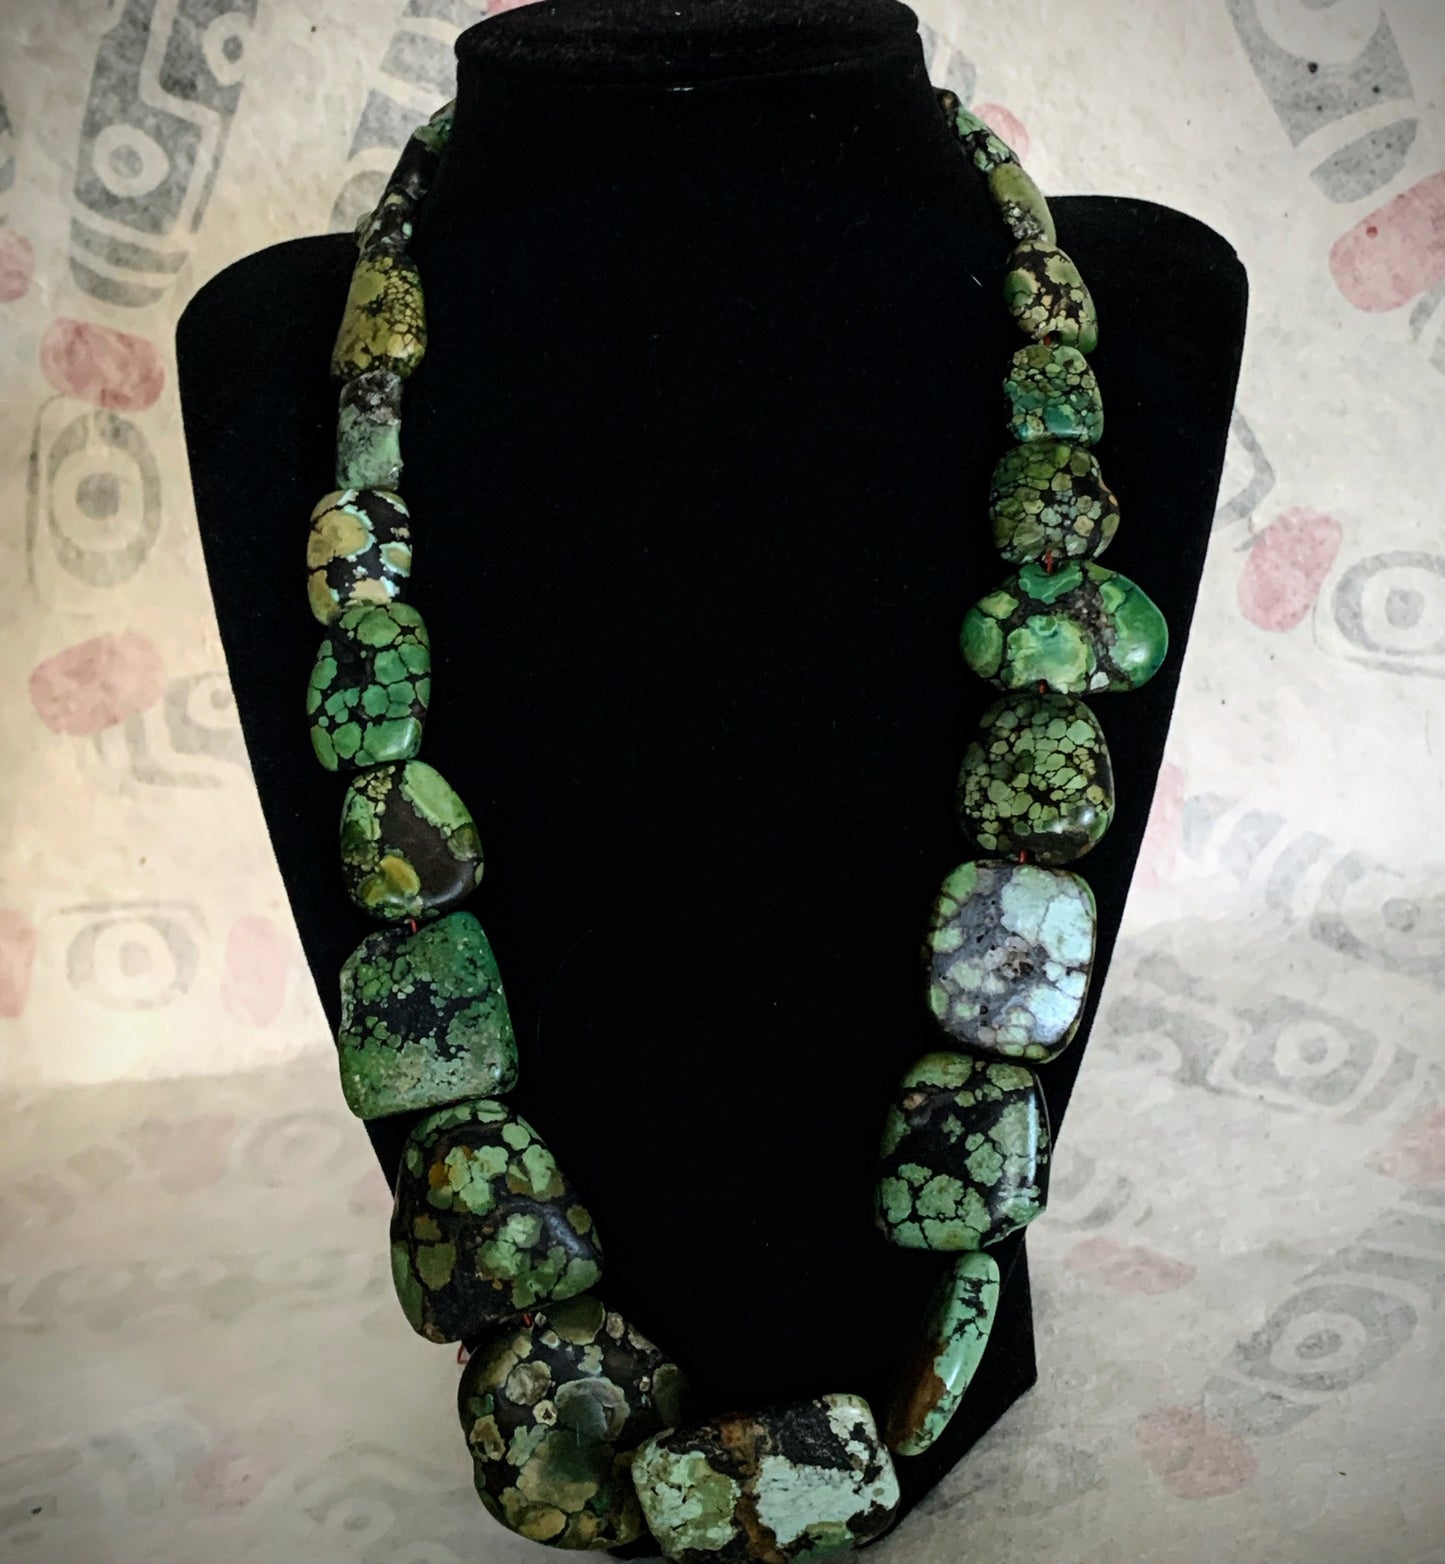 Antique Tibetan turquoise necklace